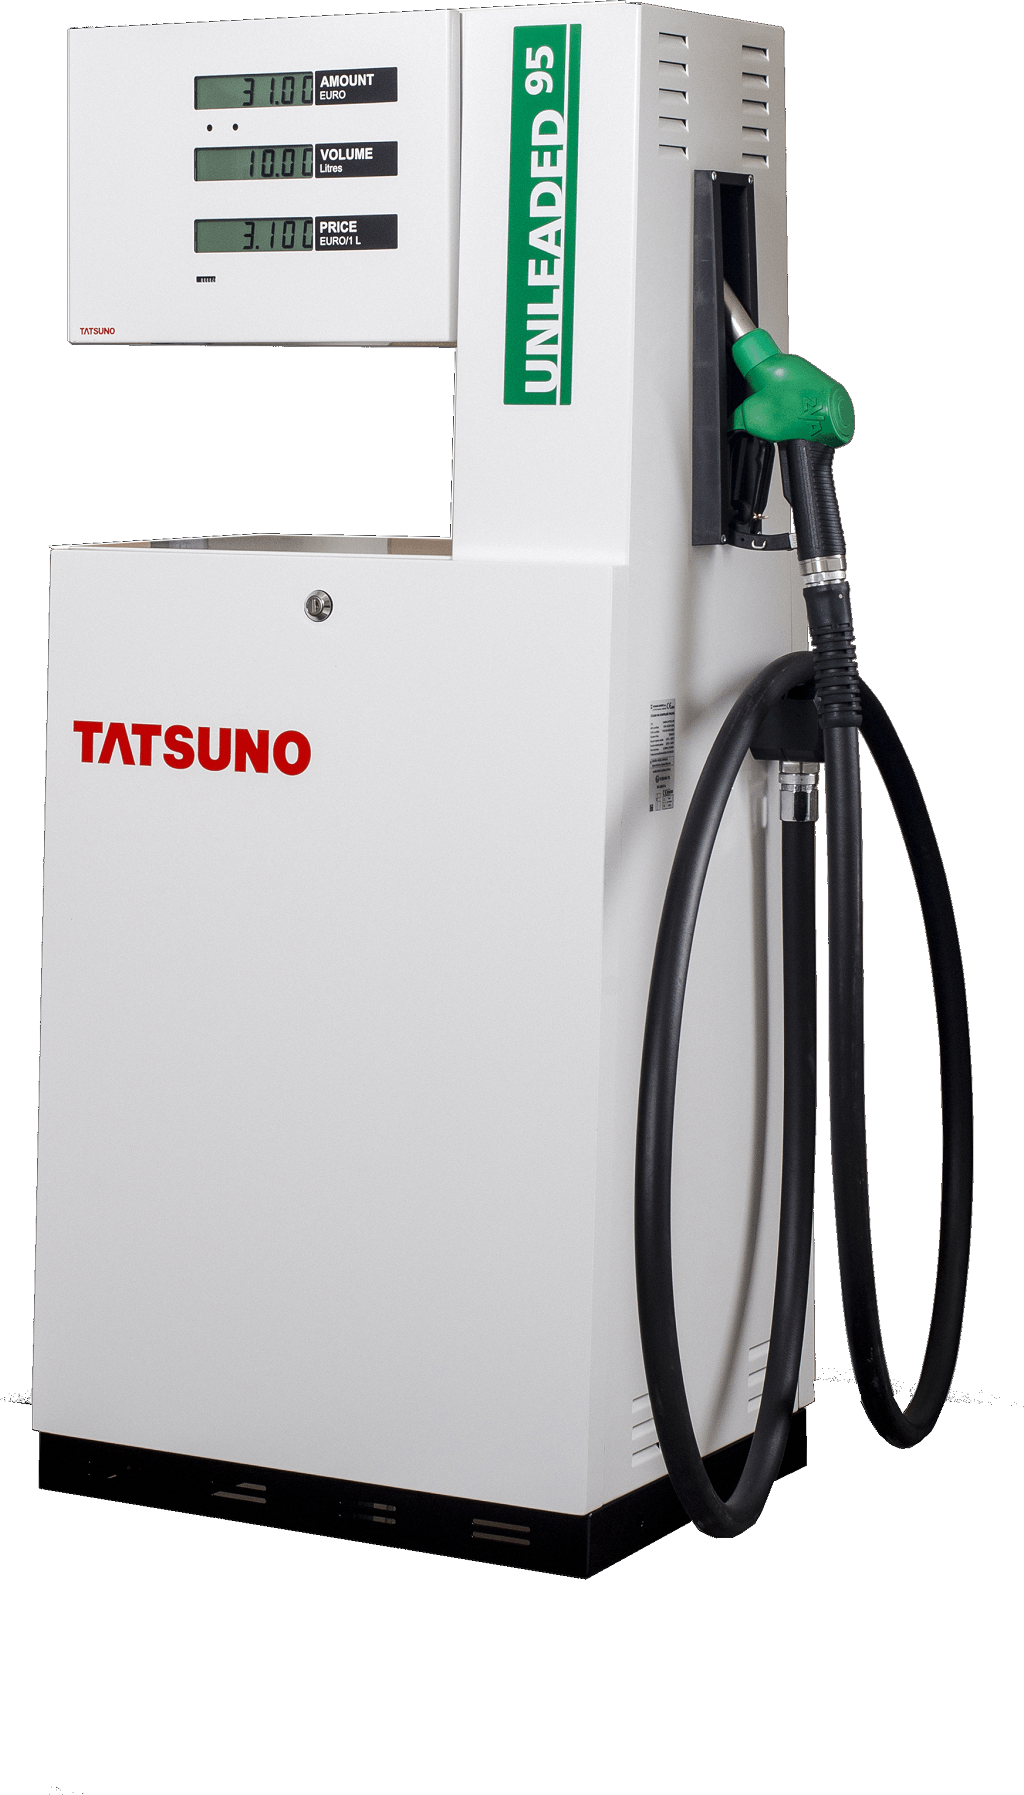 https://www.berthet-equipements-petroliers.com/wp-content/uploads/2016/12/berthet-distributeur-carburant-Tatsuno-alx.png